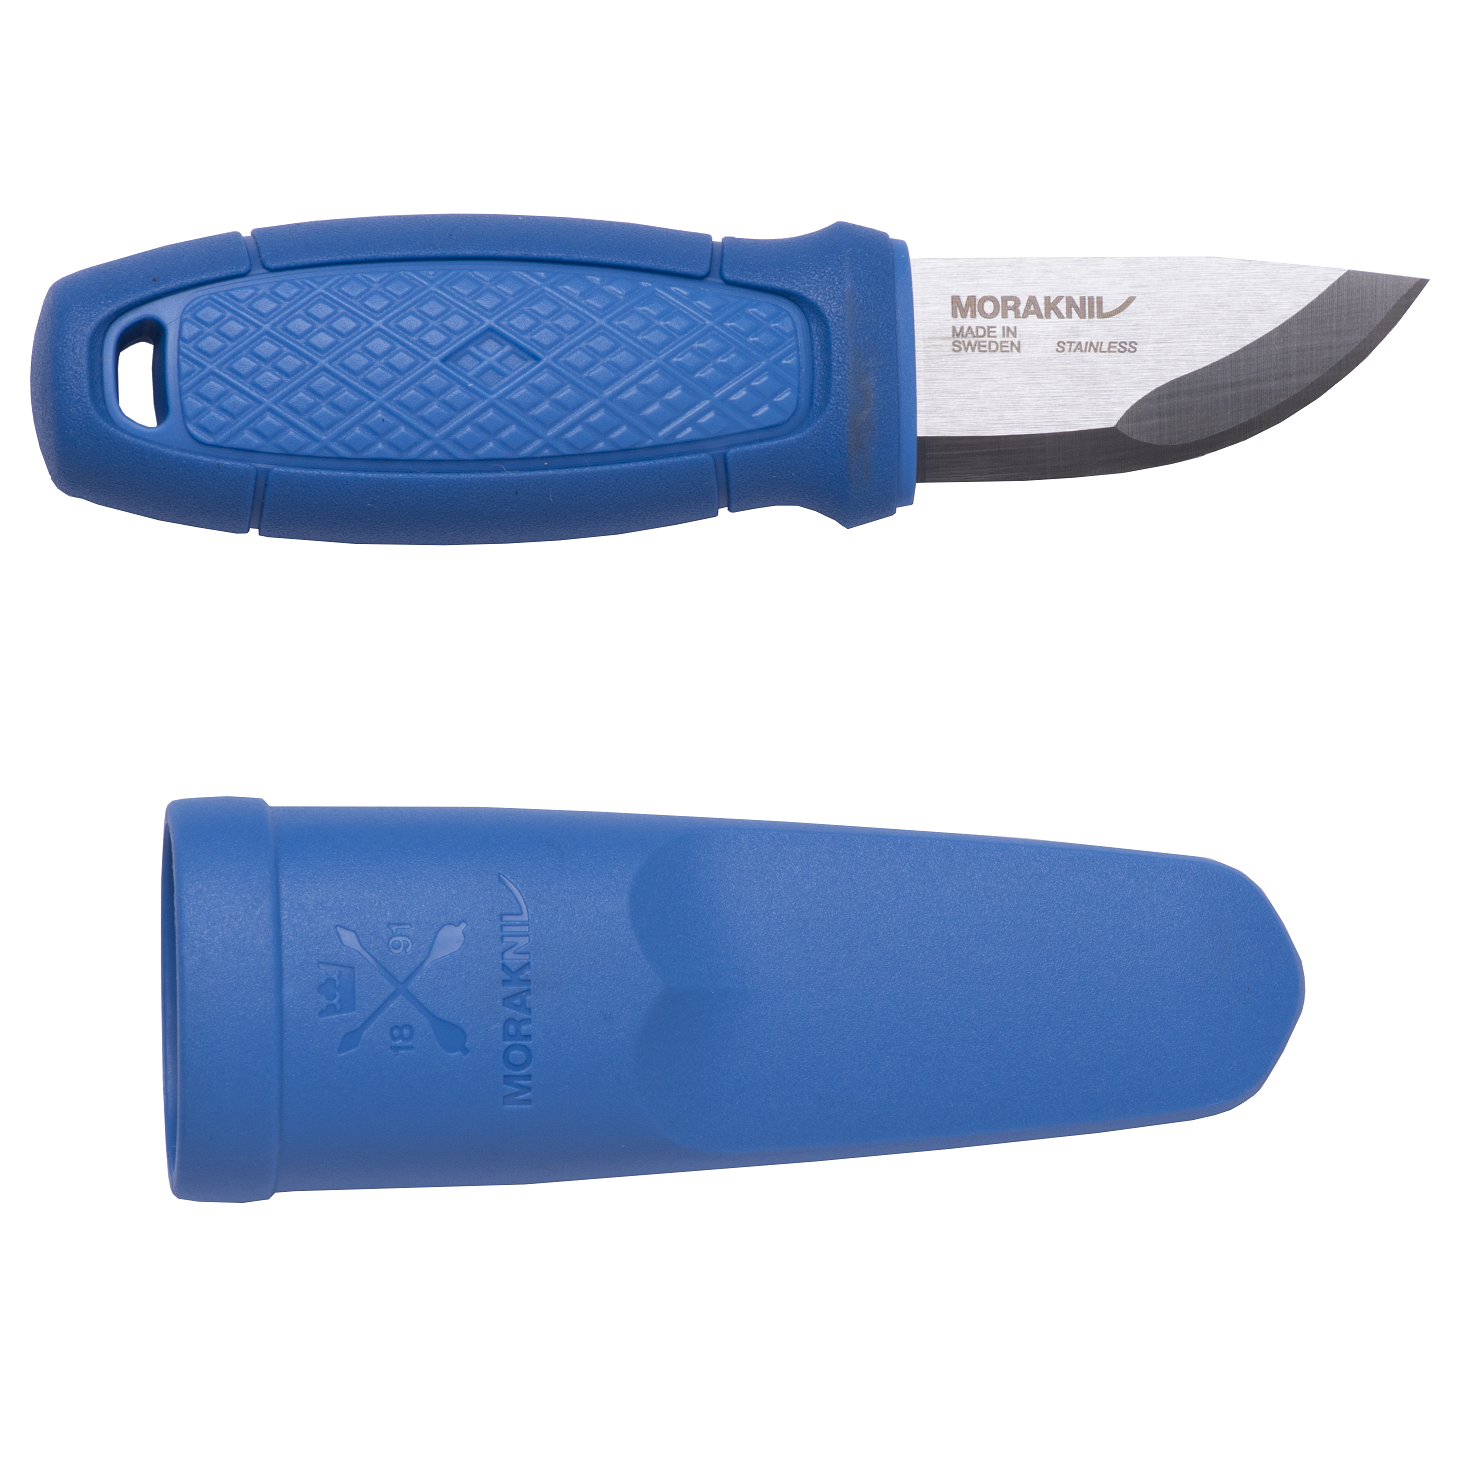 Knife Morakniv Eldris blue set